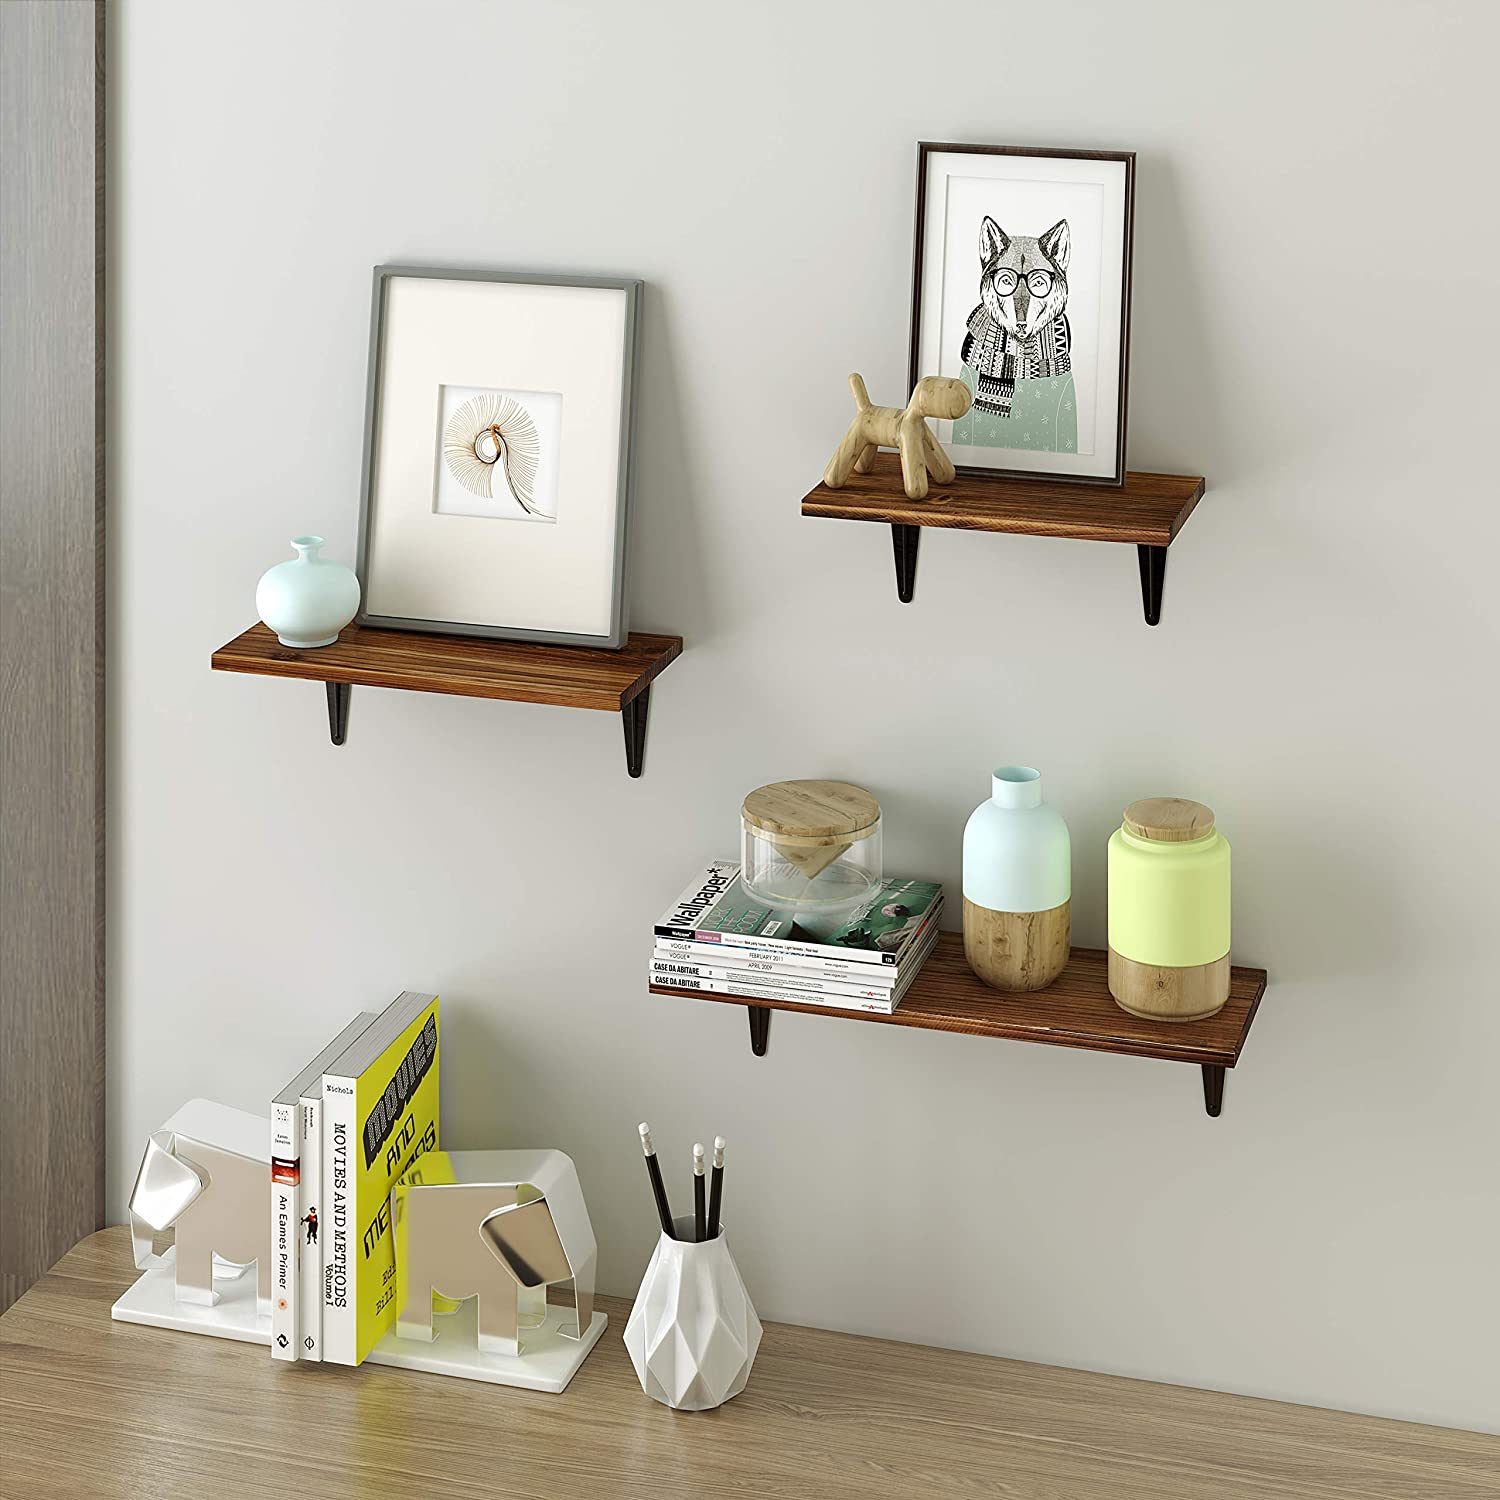 Wall Shelves: Organizer Set of 3 for Living Room, Bedroom, Kitchen, Bathroom, Office